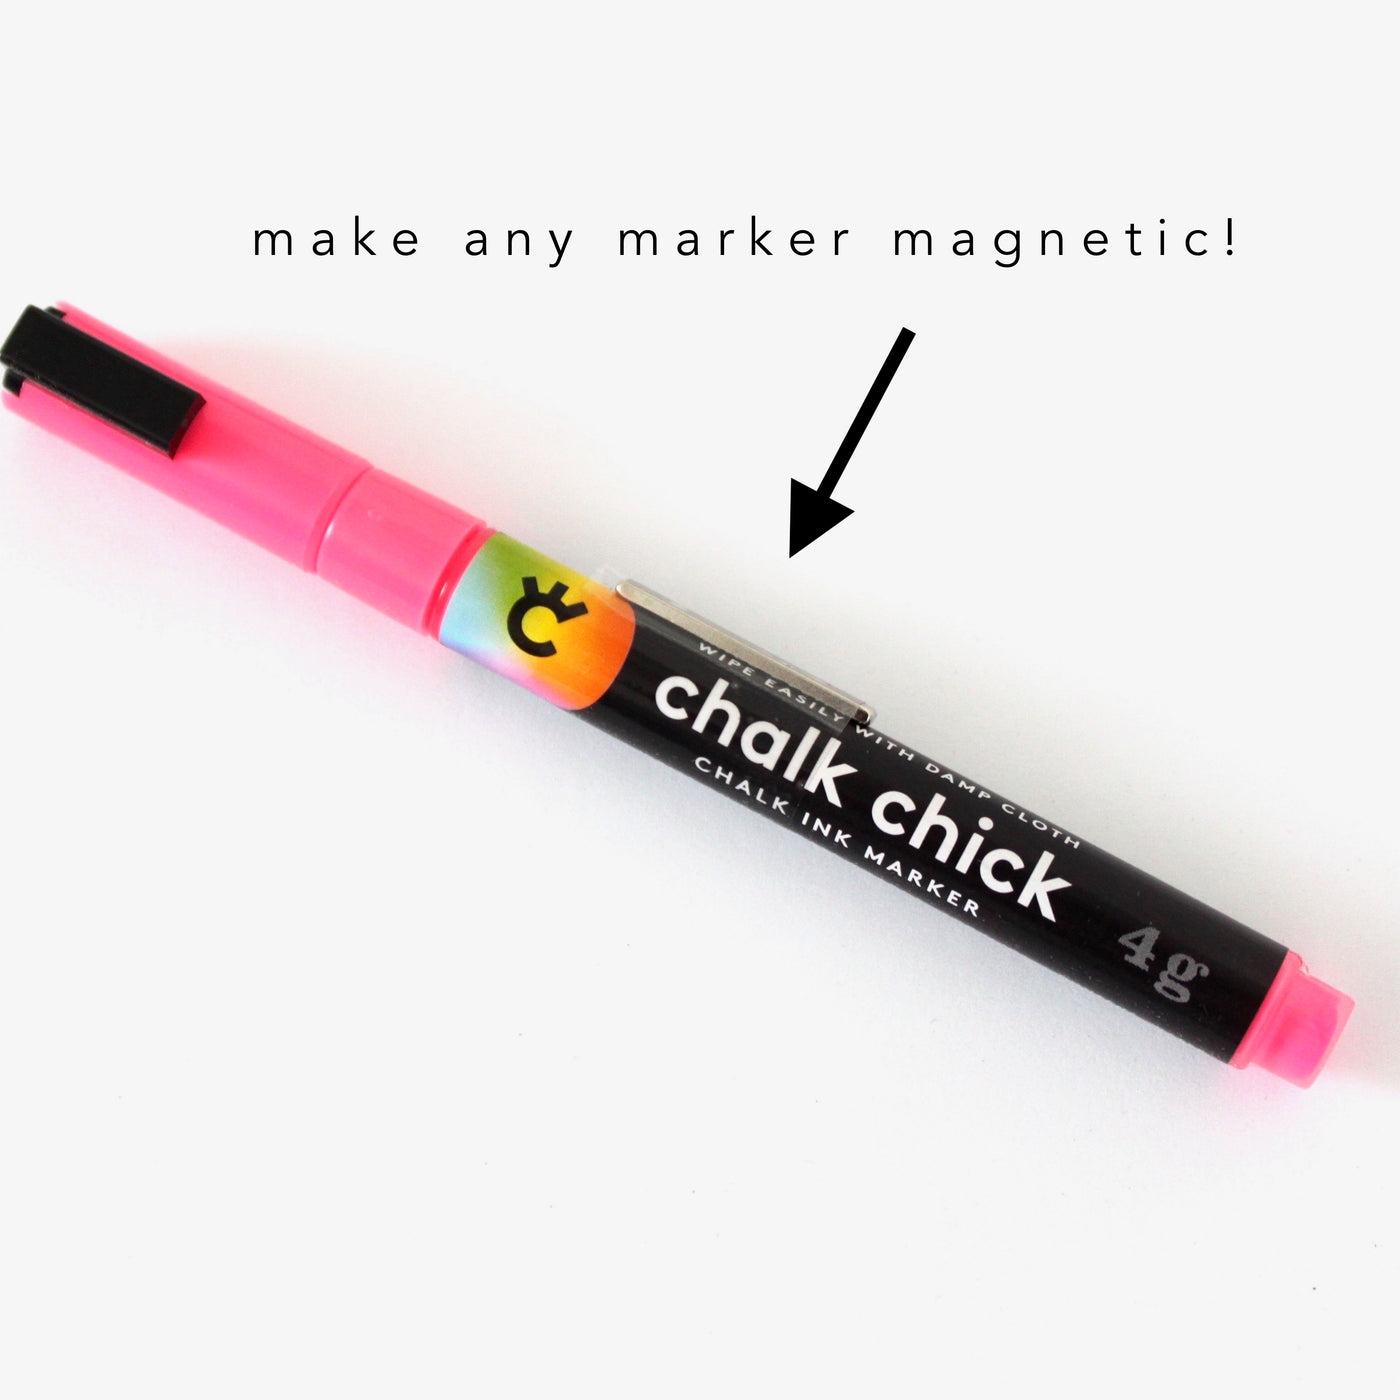 Make any marker magnetic!